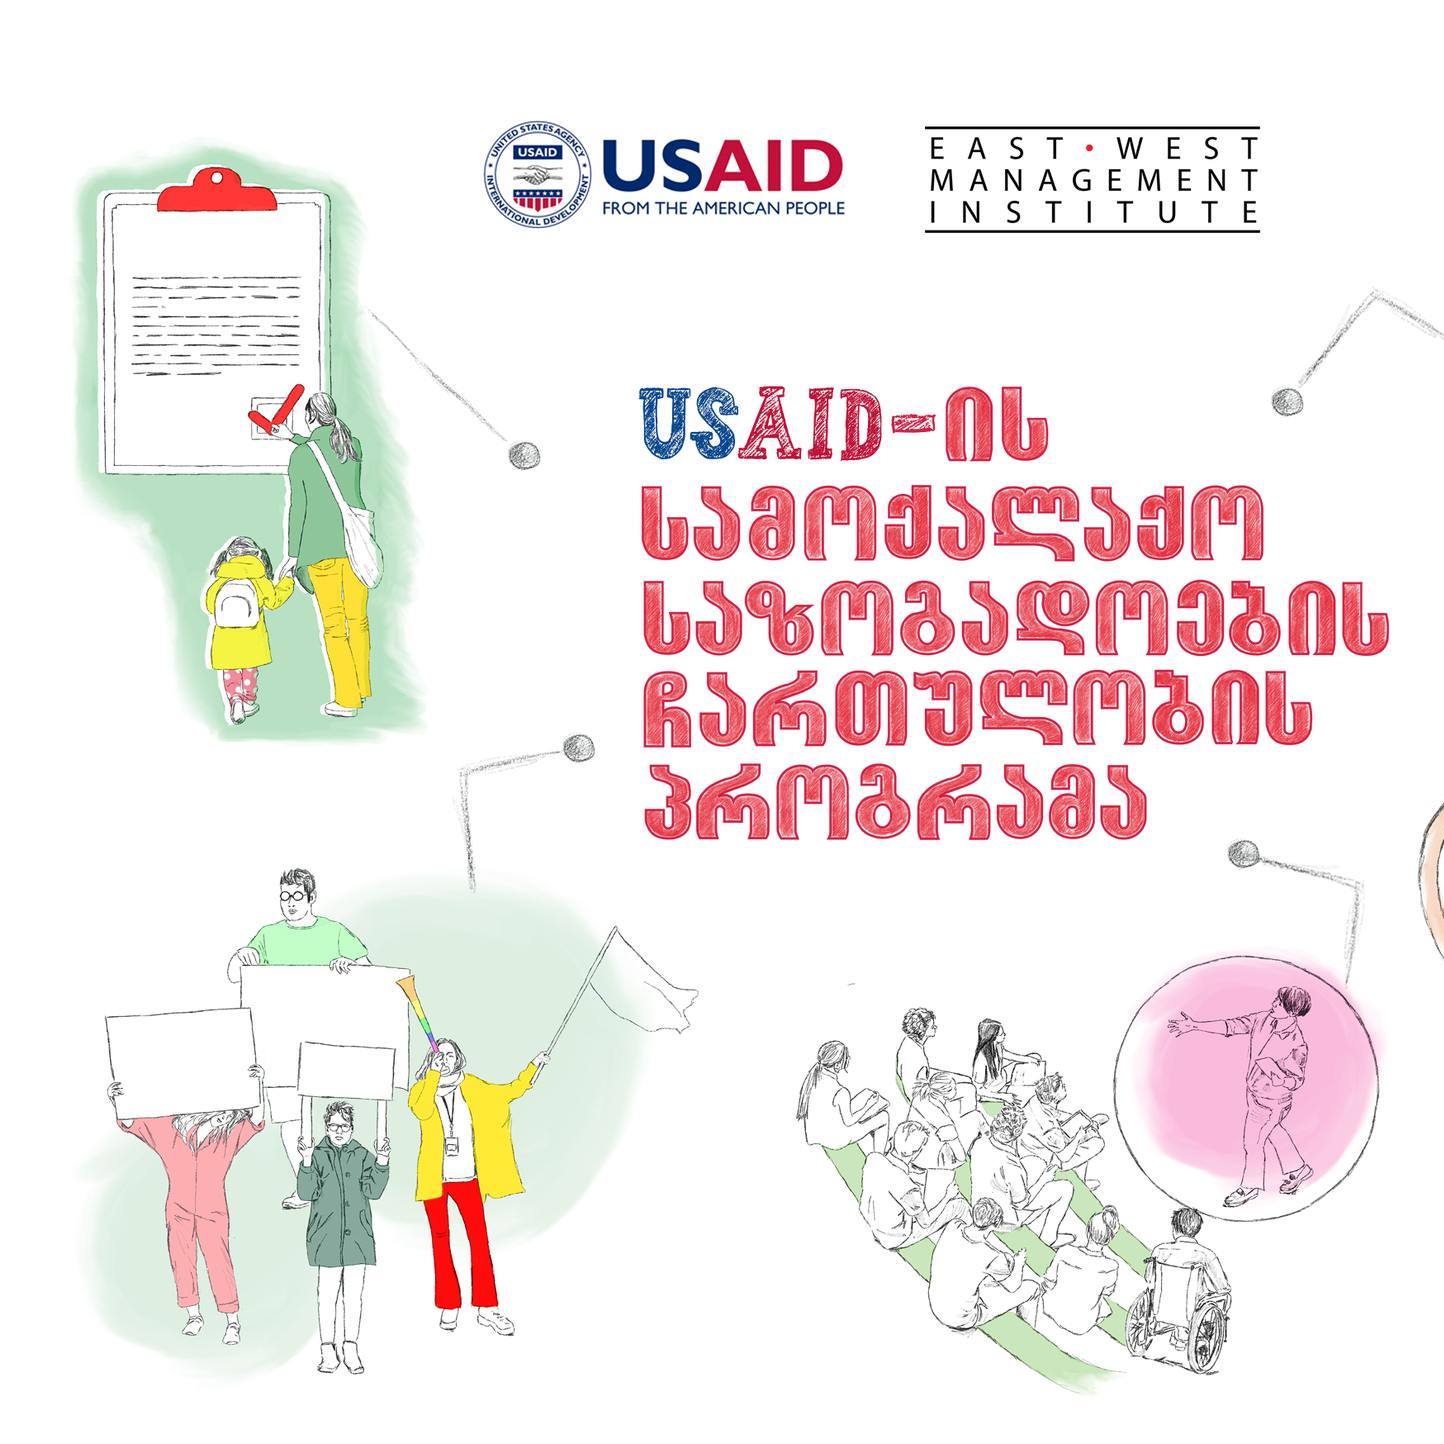  Civil Society Engagement Program (USAID)